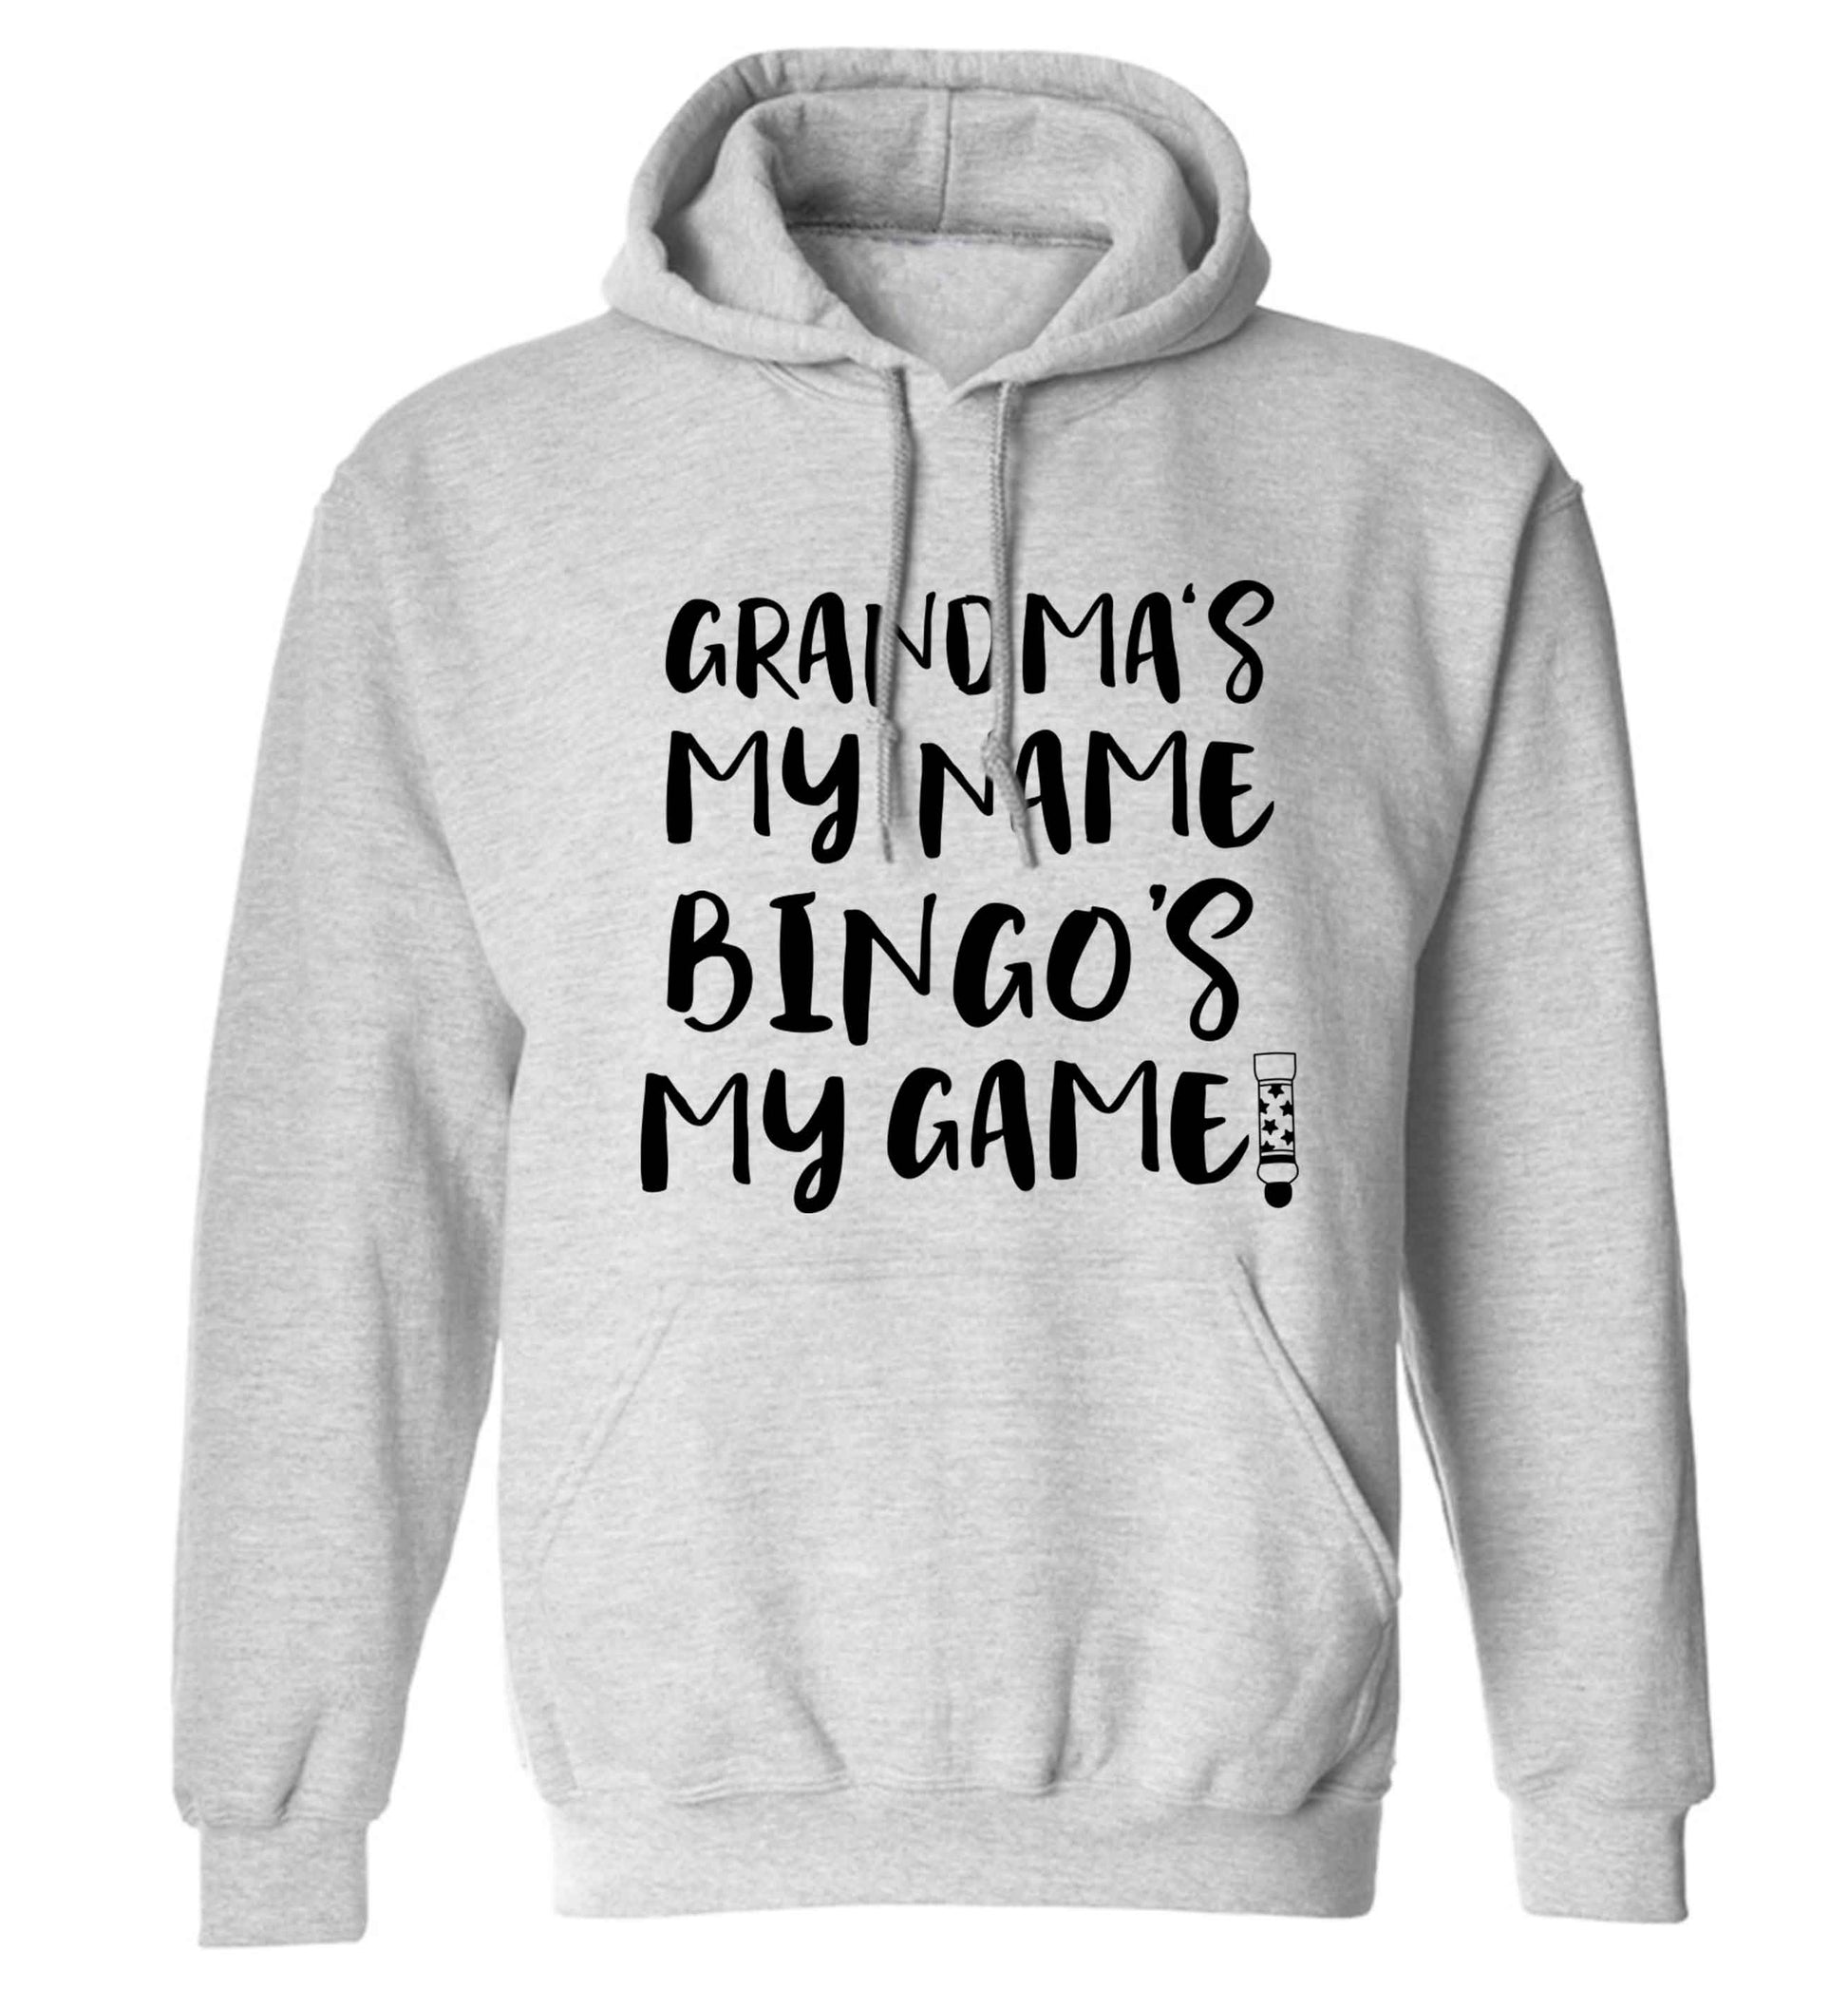 Grandma's my name bingo's my game! adults unisex grey hoodie 2XL